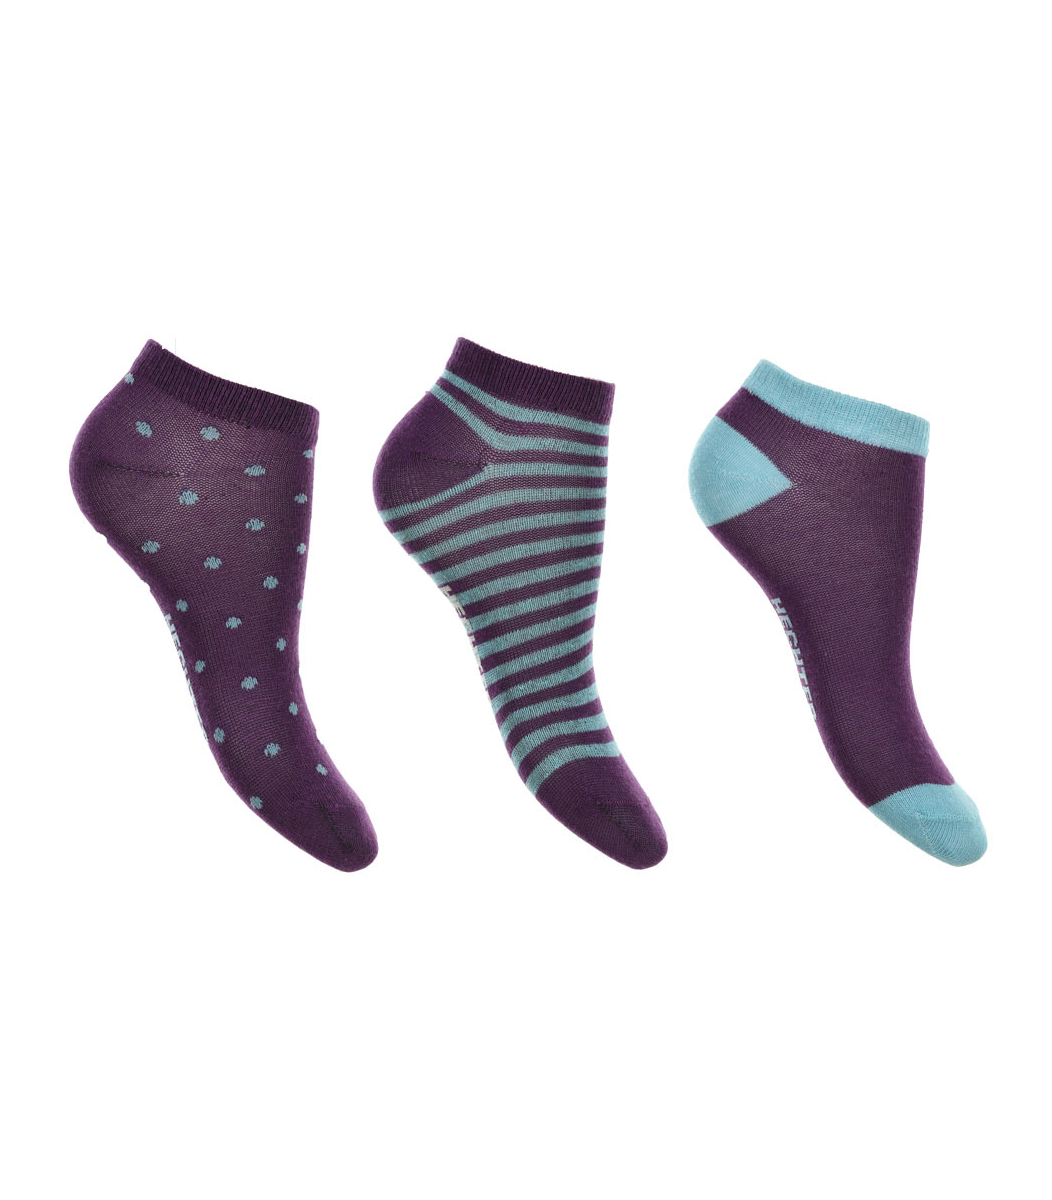  Tights HECTER Socks 3 pairs SUDHRH0602-2